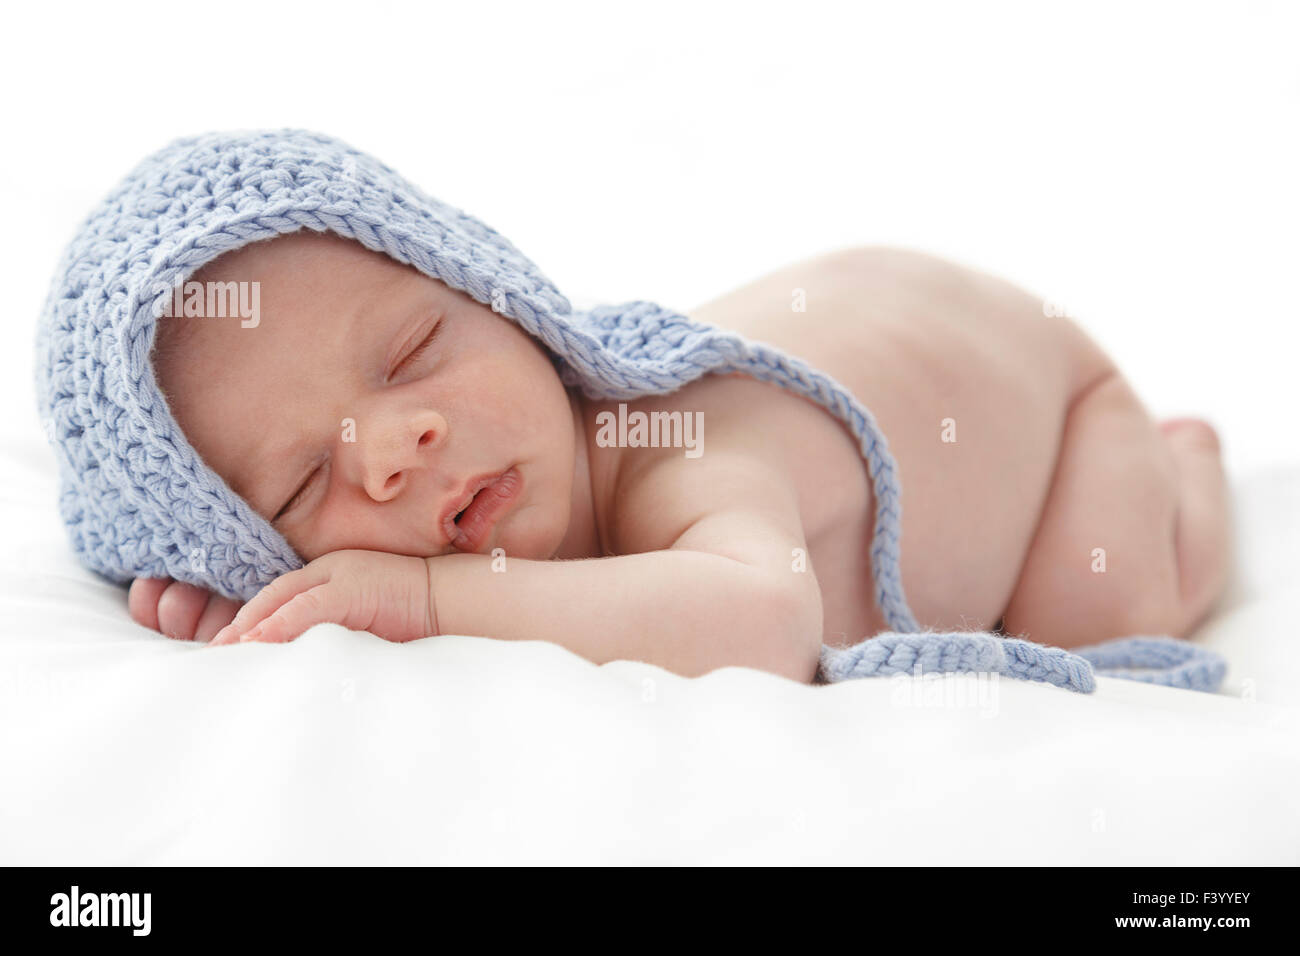 Sleeping newborn baby wearing a blue hat. Stock Photo